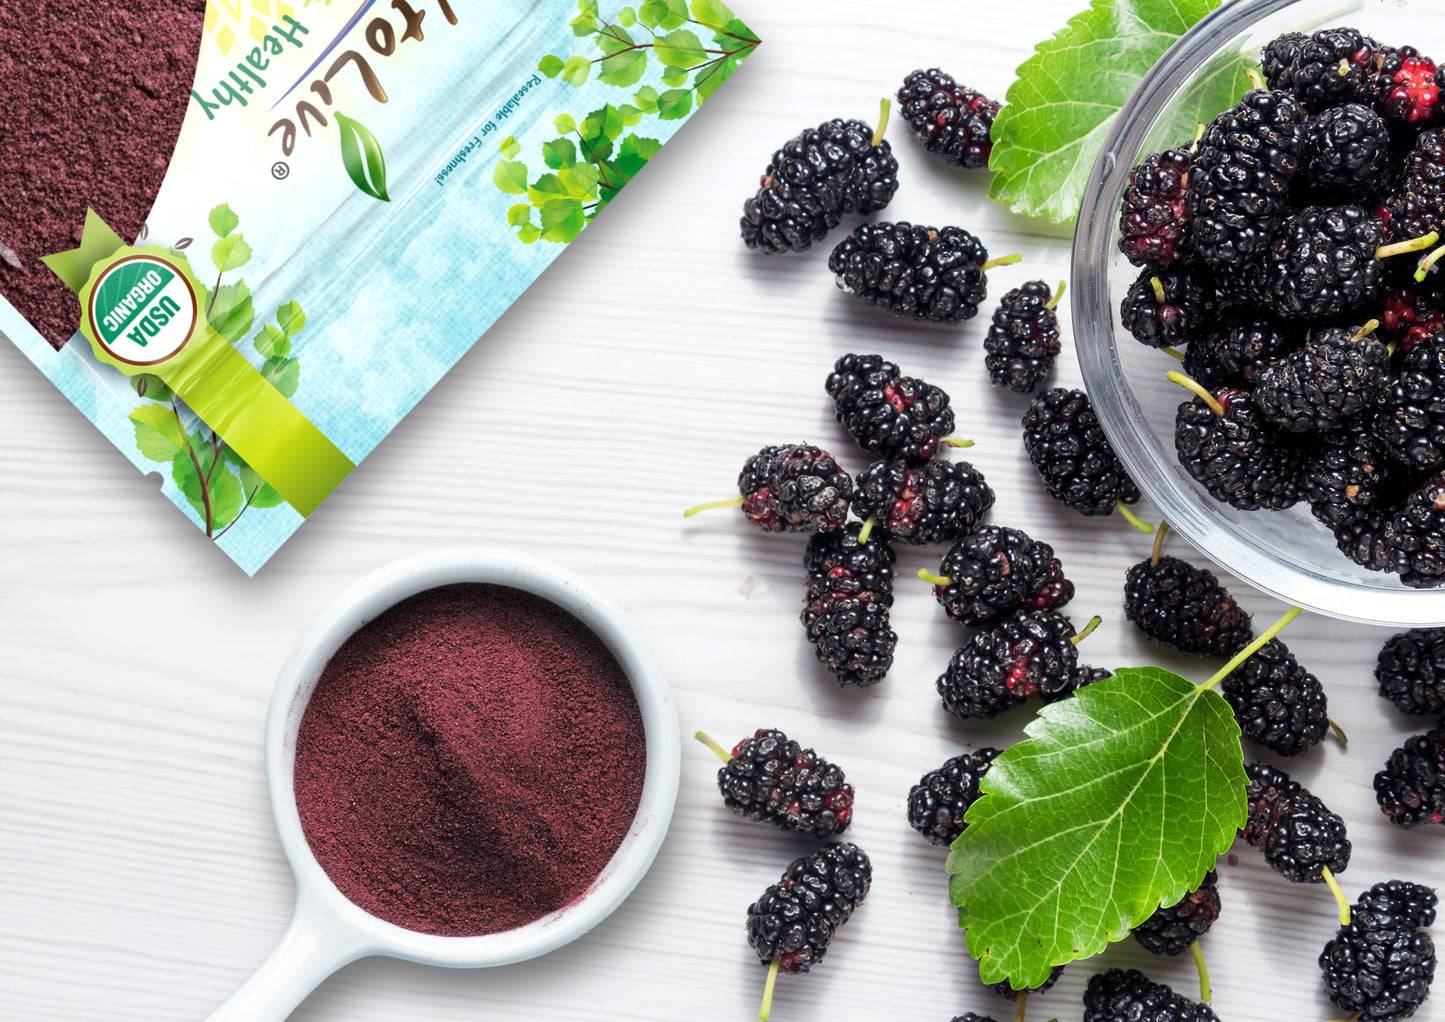 Organic Mulberry Powder - Non-GMO, Raw, Vegan, Bulk, No Sugar Added - by Food to Live